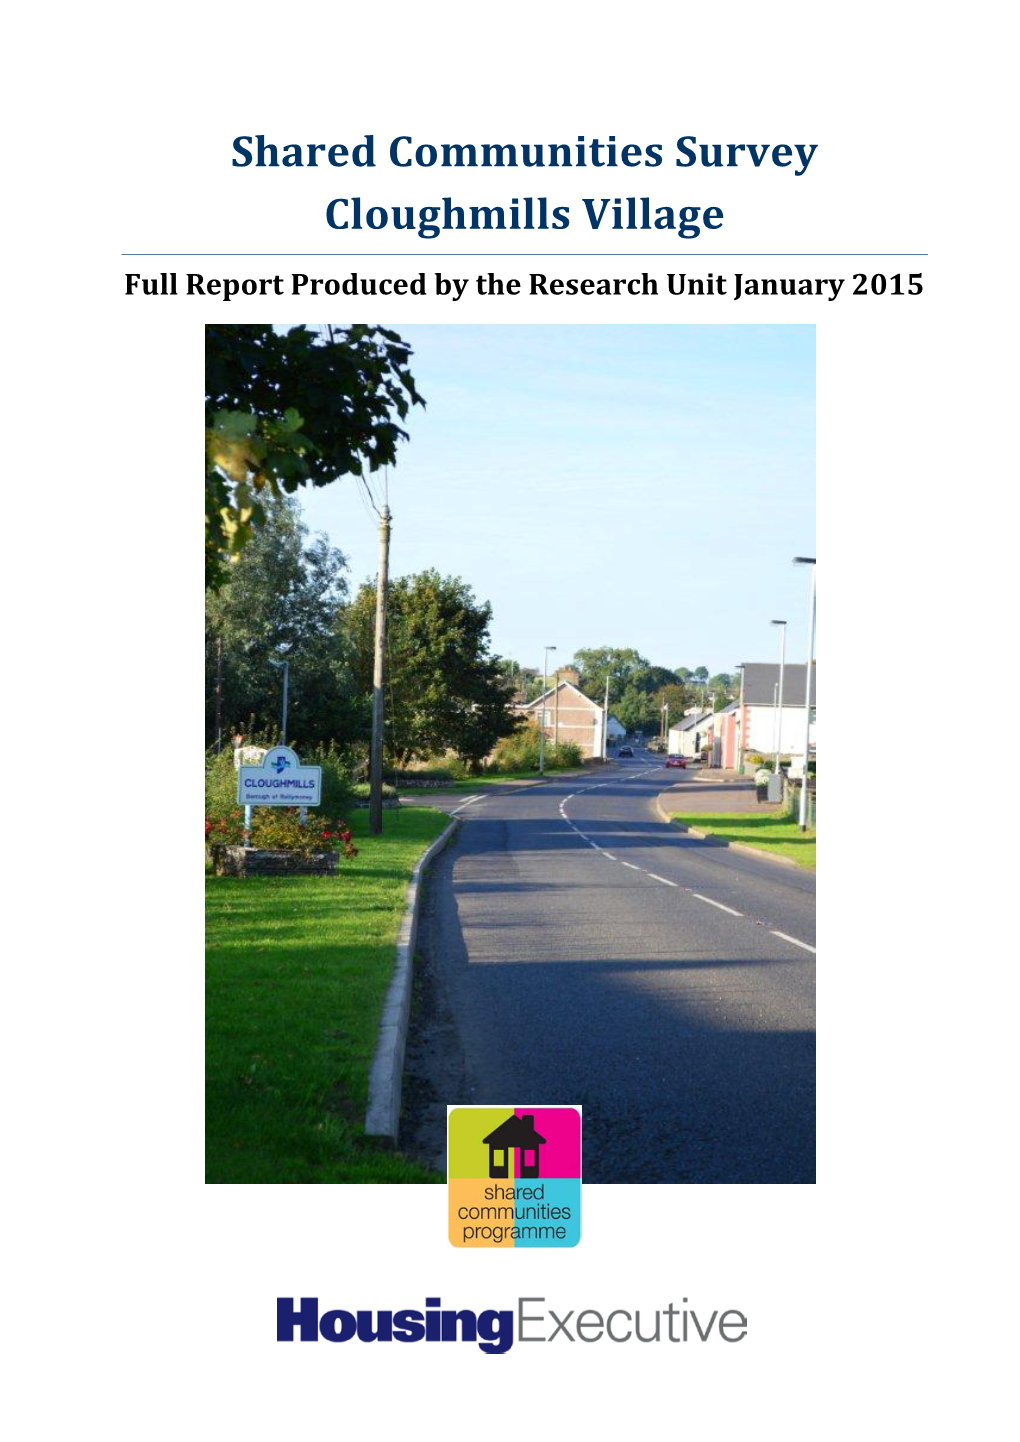 Cloughmills Shared Community Survey